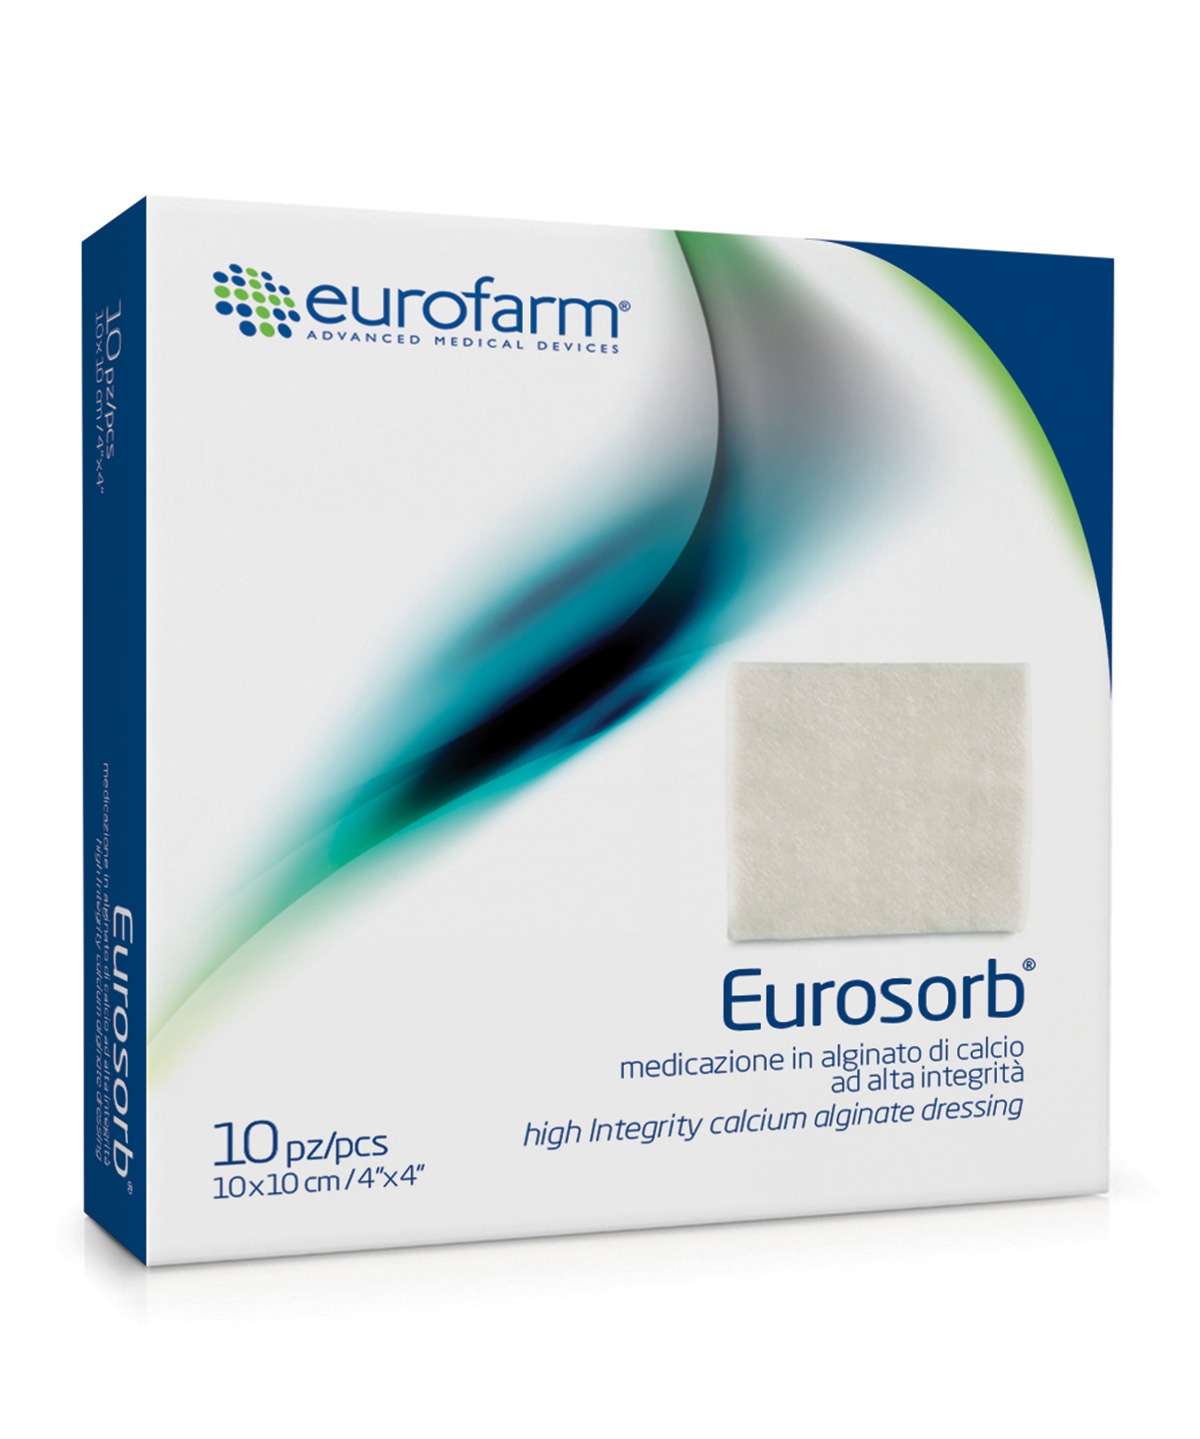 EUROSORB Medicazione